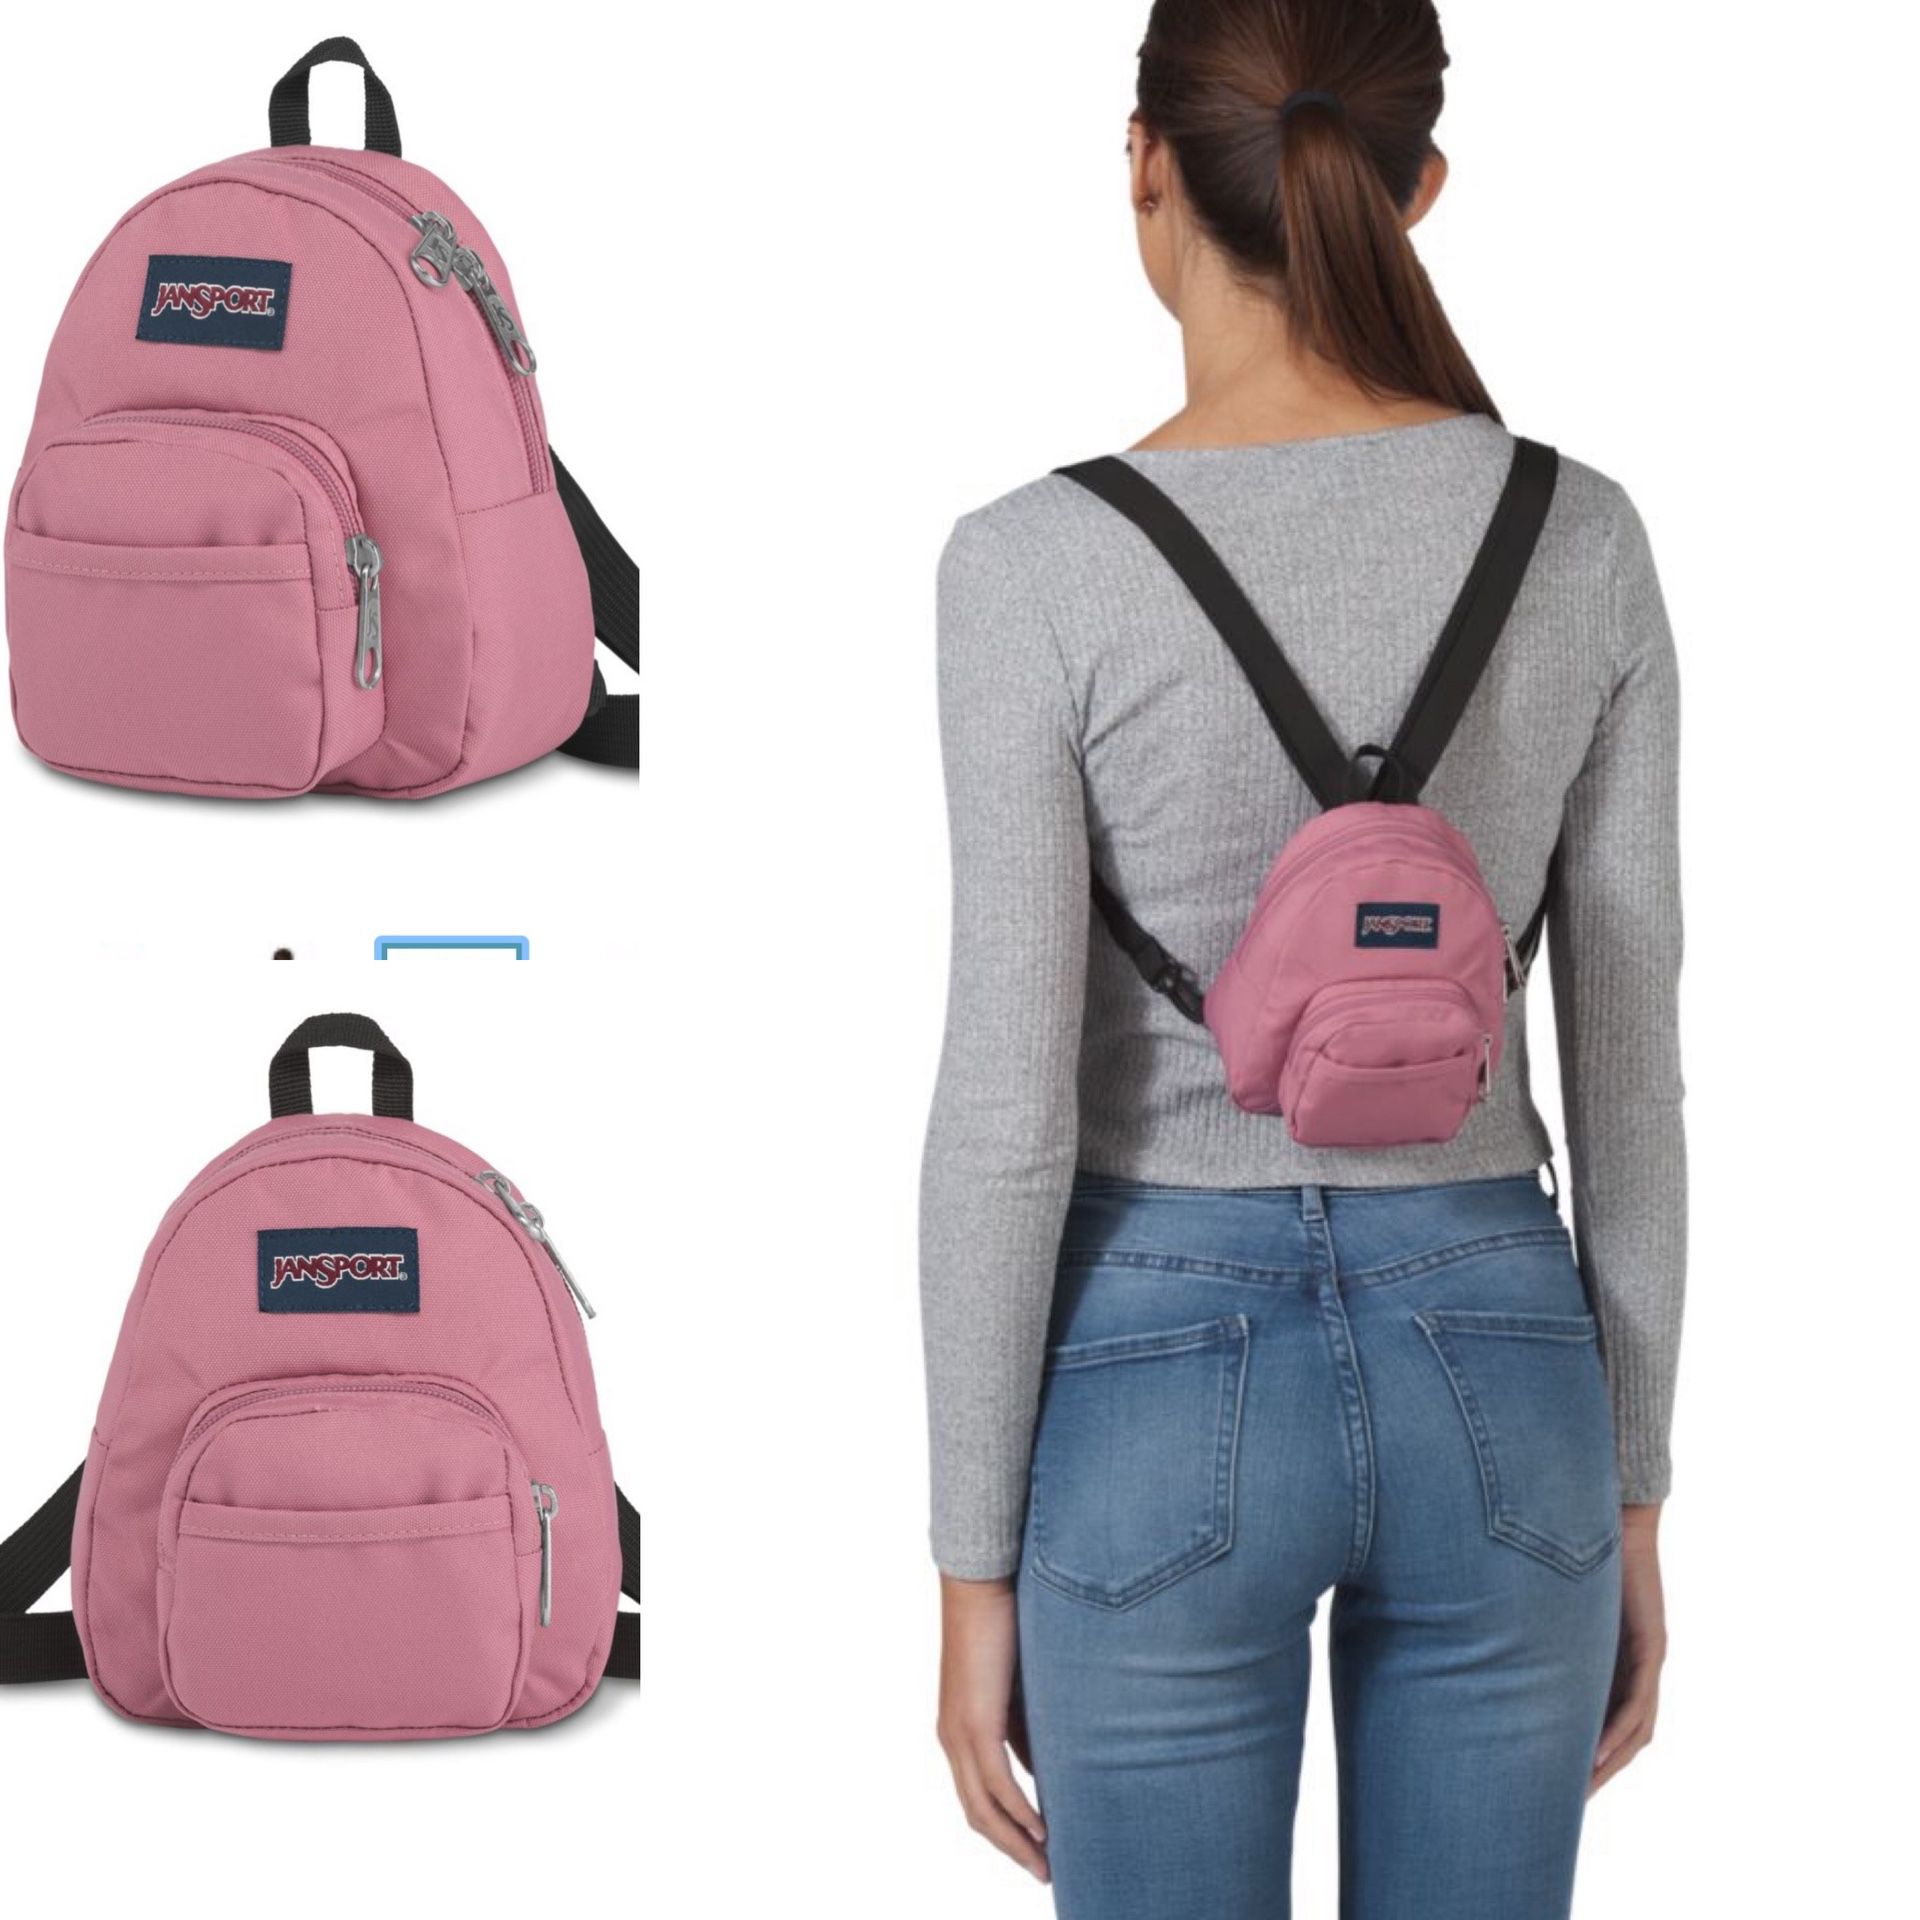 Mini backpack jansport